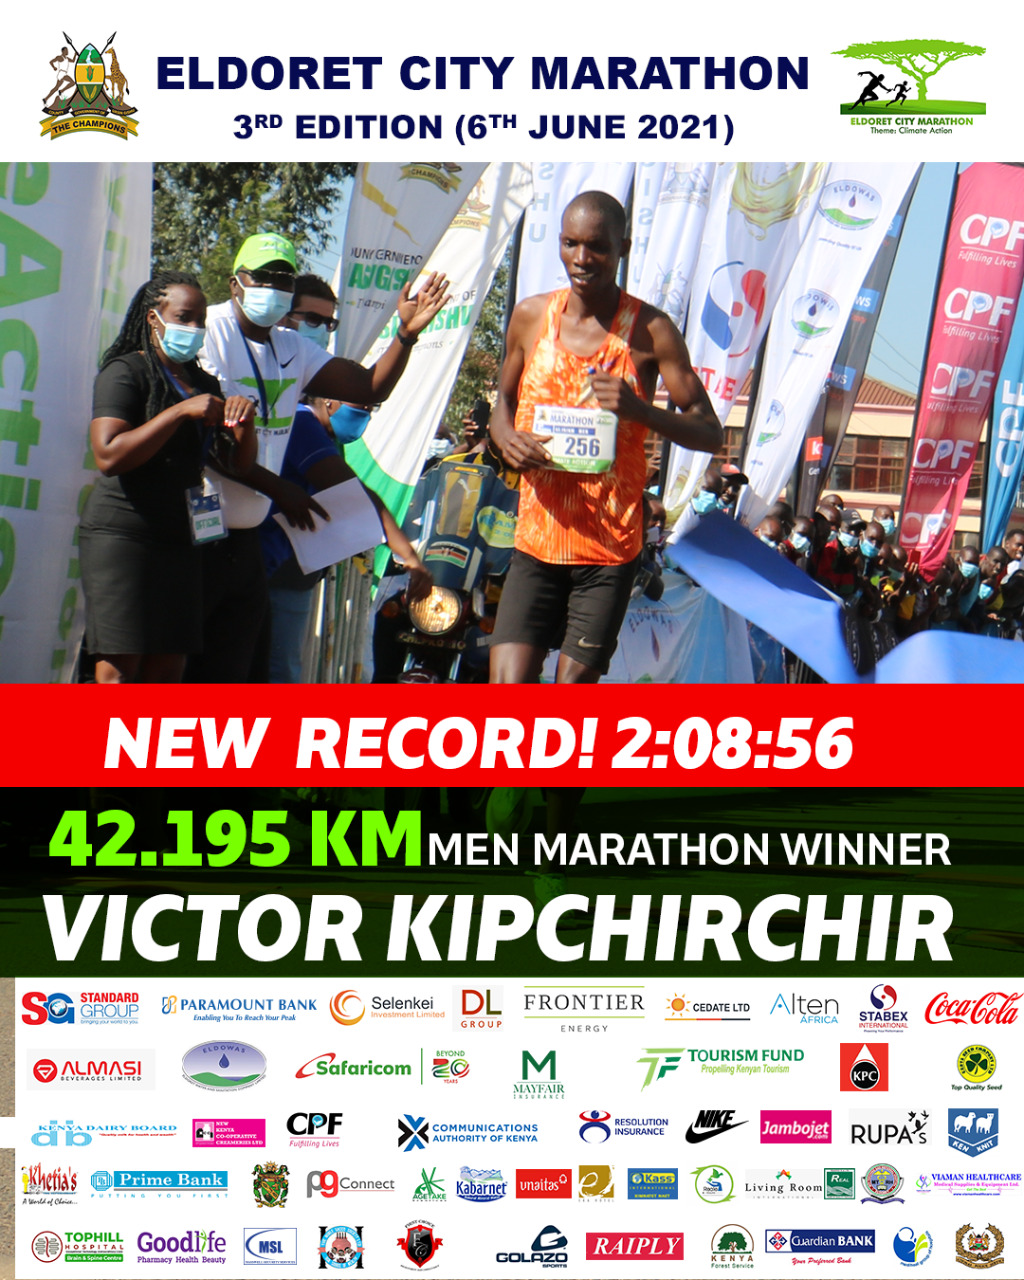 Victor Kipchirchir Wins Eldoret City Marathon 2021 in a New Course Record